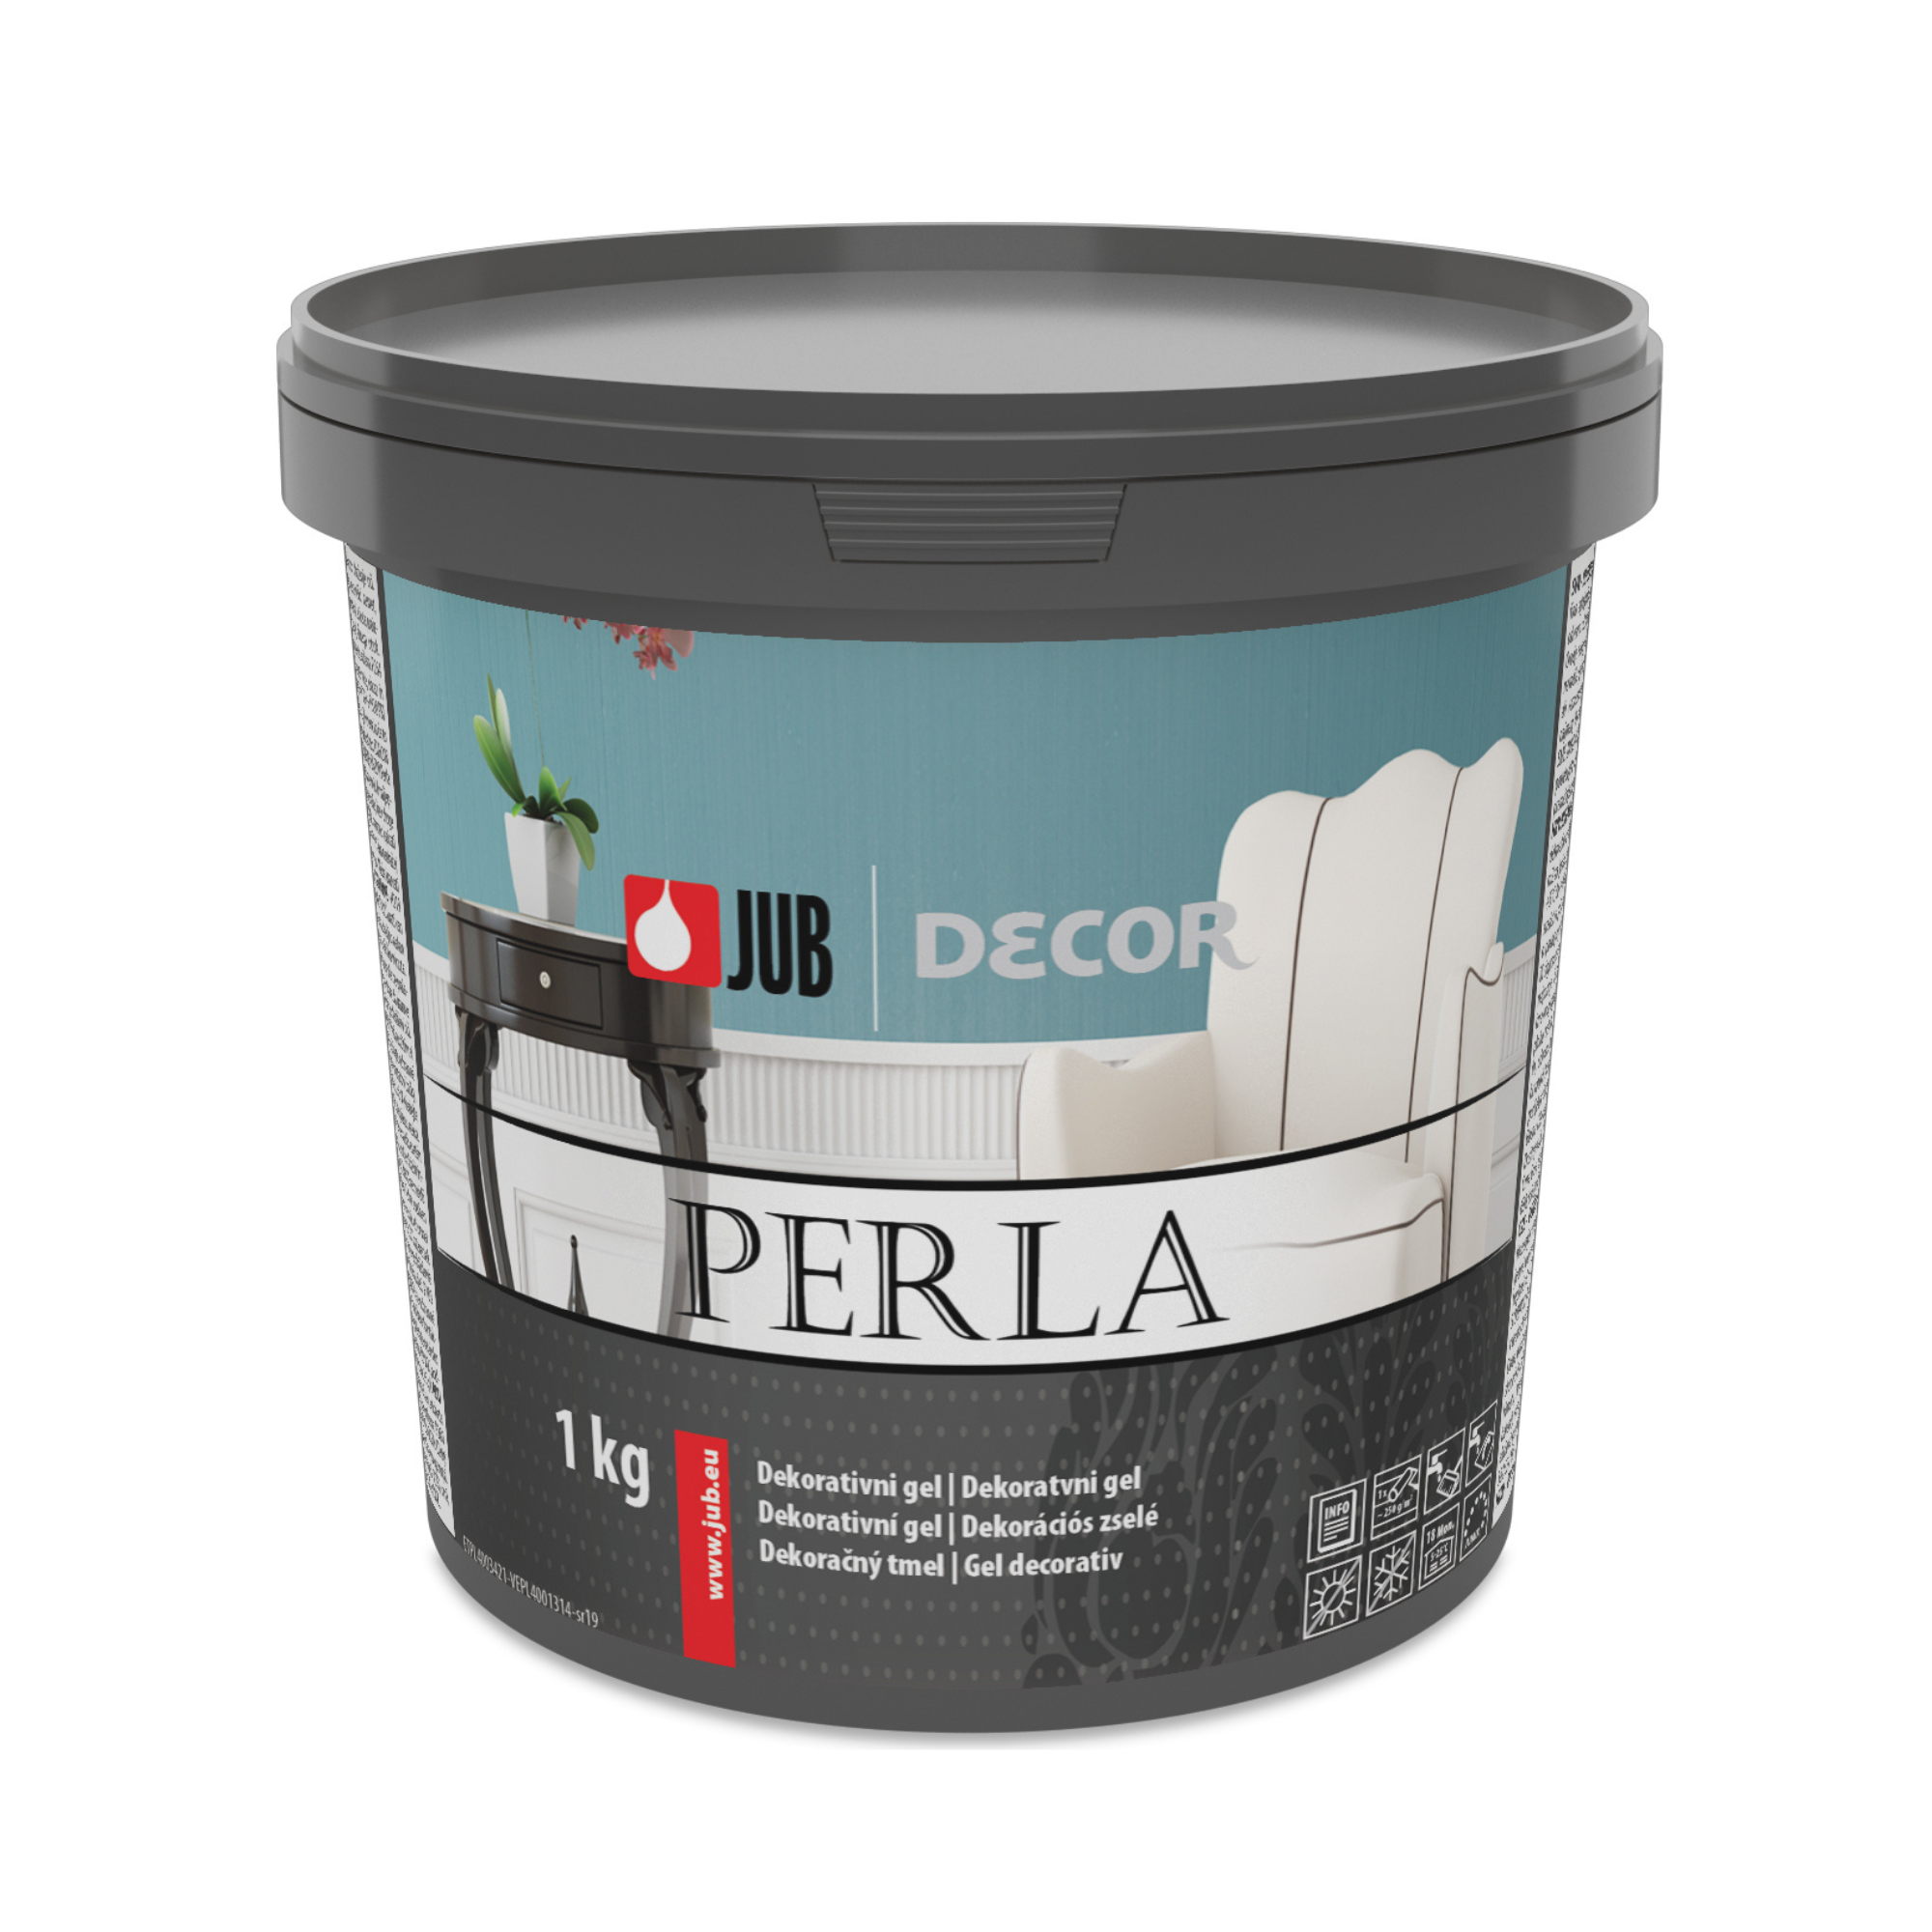 JUB DECOR Perla dekoratívny gél 1 kg